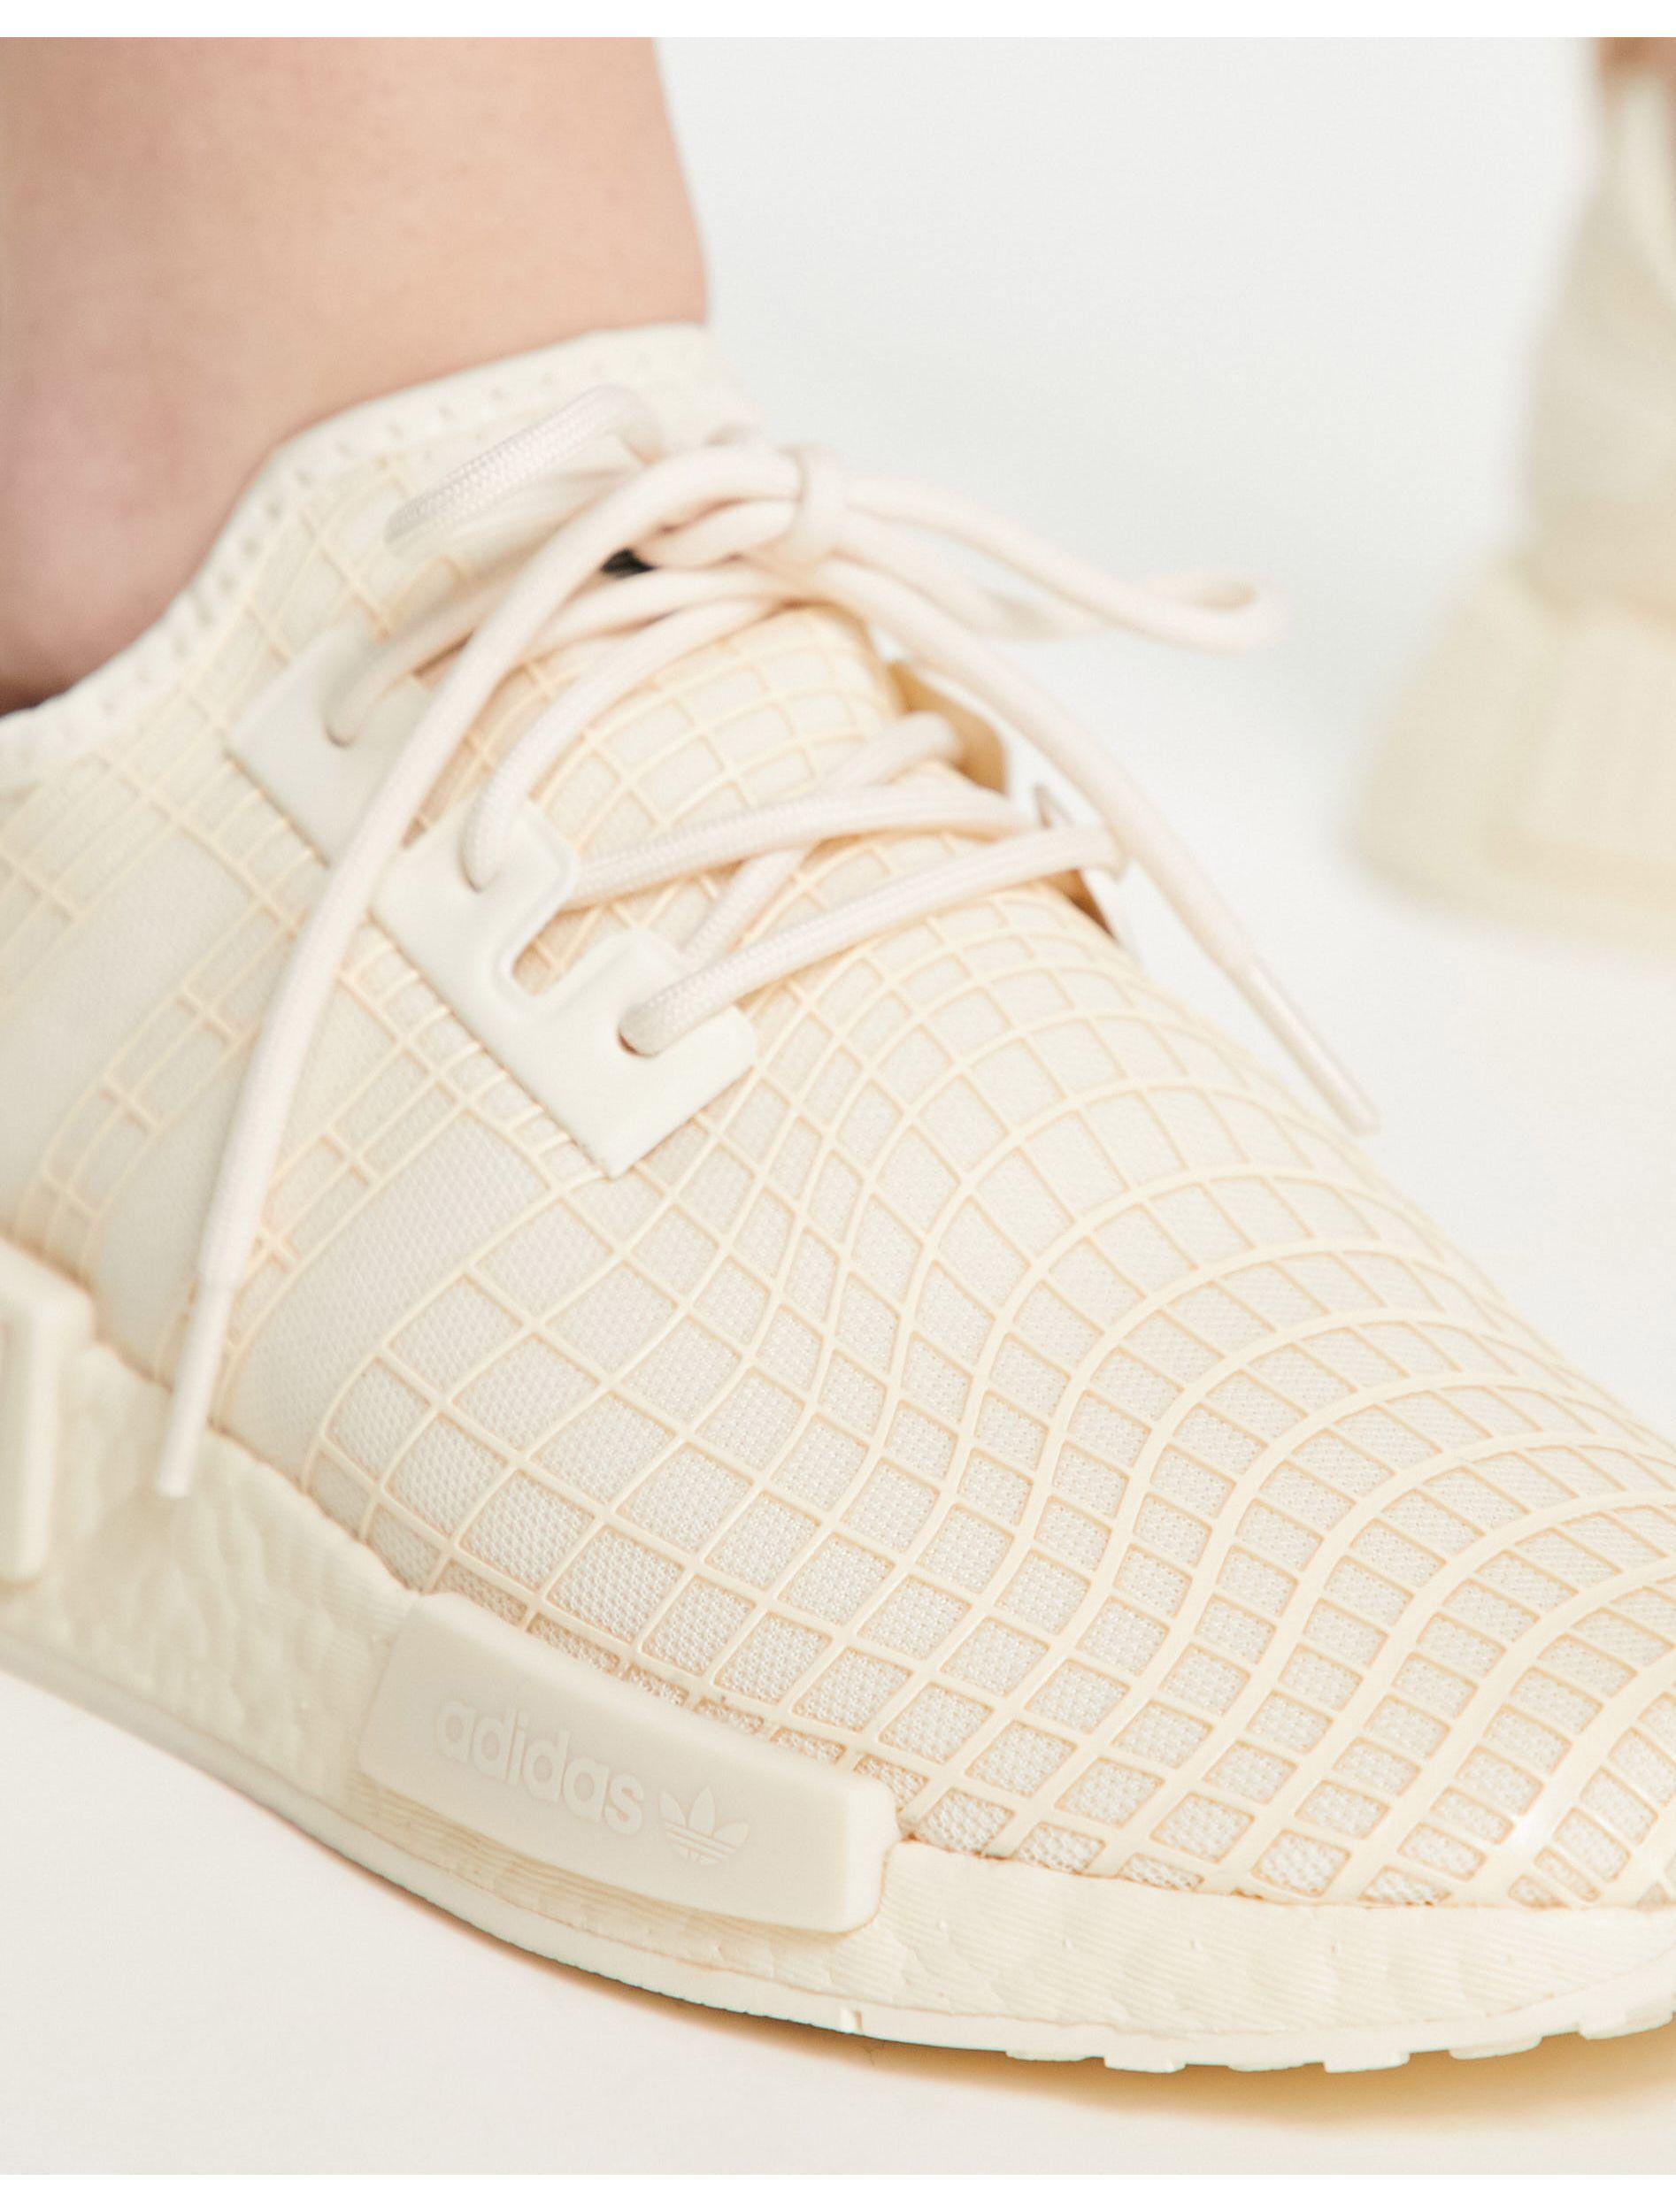 Ulv i fåretøj motivet fragment adidas Originals Nmd_r1 Sneakers in White | Lyst